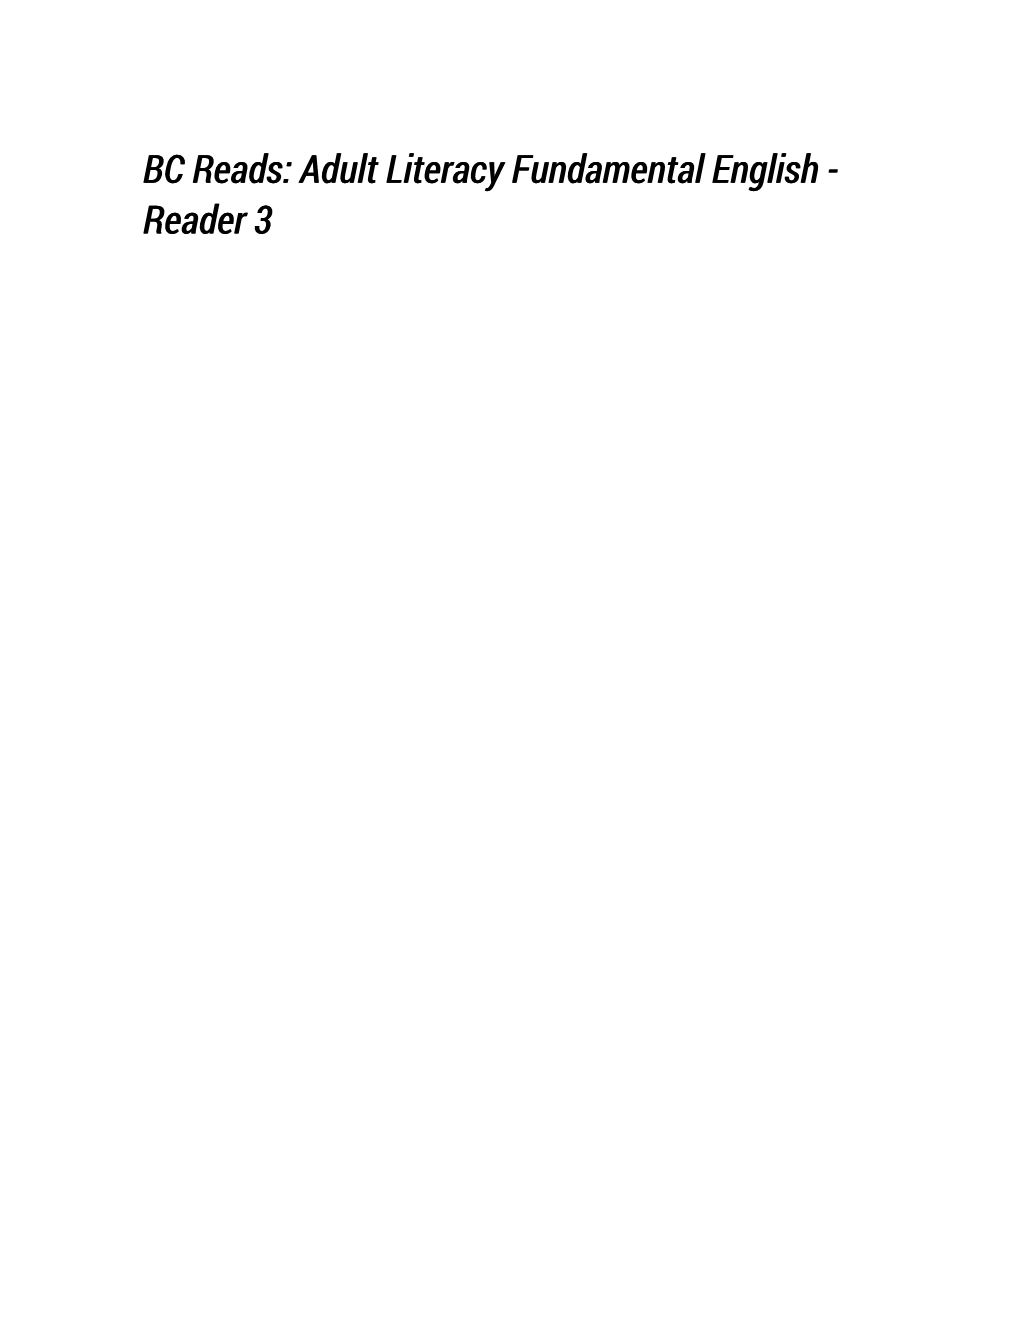 BC Reads: Adult Literacy Fundamental English - Reader 3 BC Reads: Adult Literacy Fundamental English - Reader 3